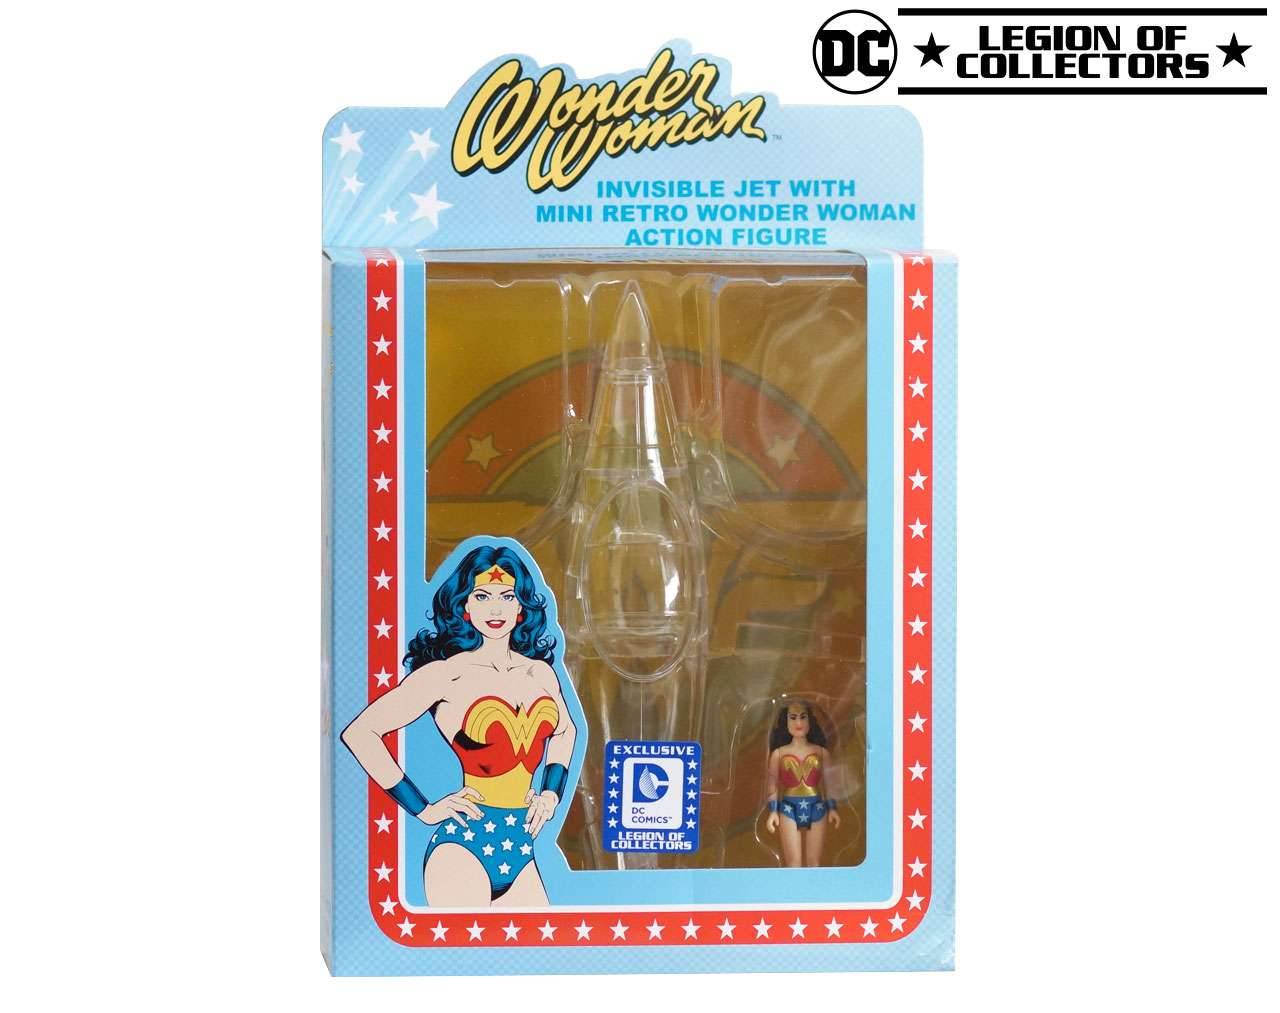 Invisible Jet with mini Retro Wonder Woman Vinyl